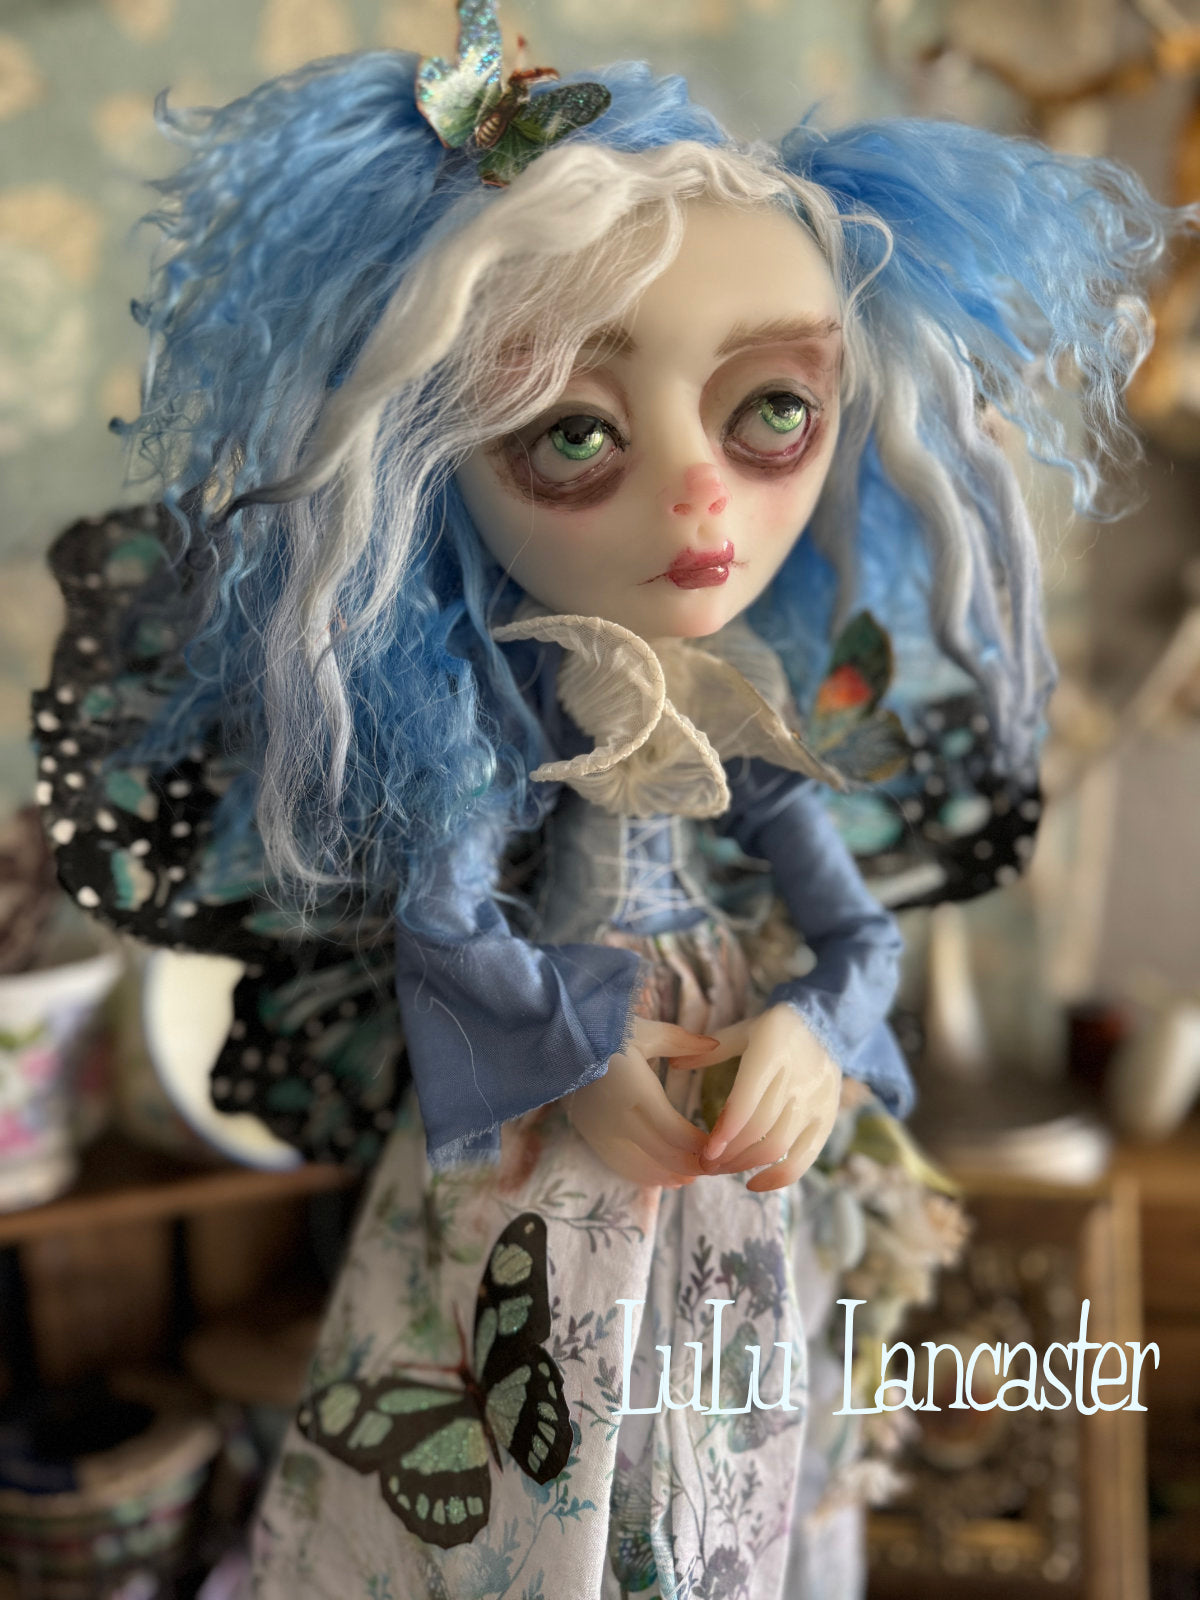 Olette the Blue Butterfly Original LuLu Lancaster Art Doll